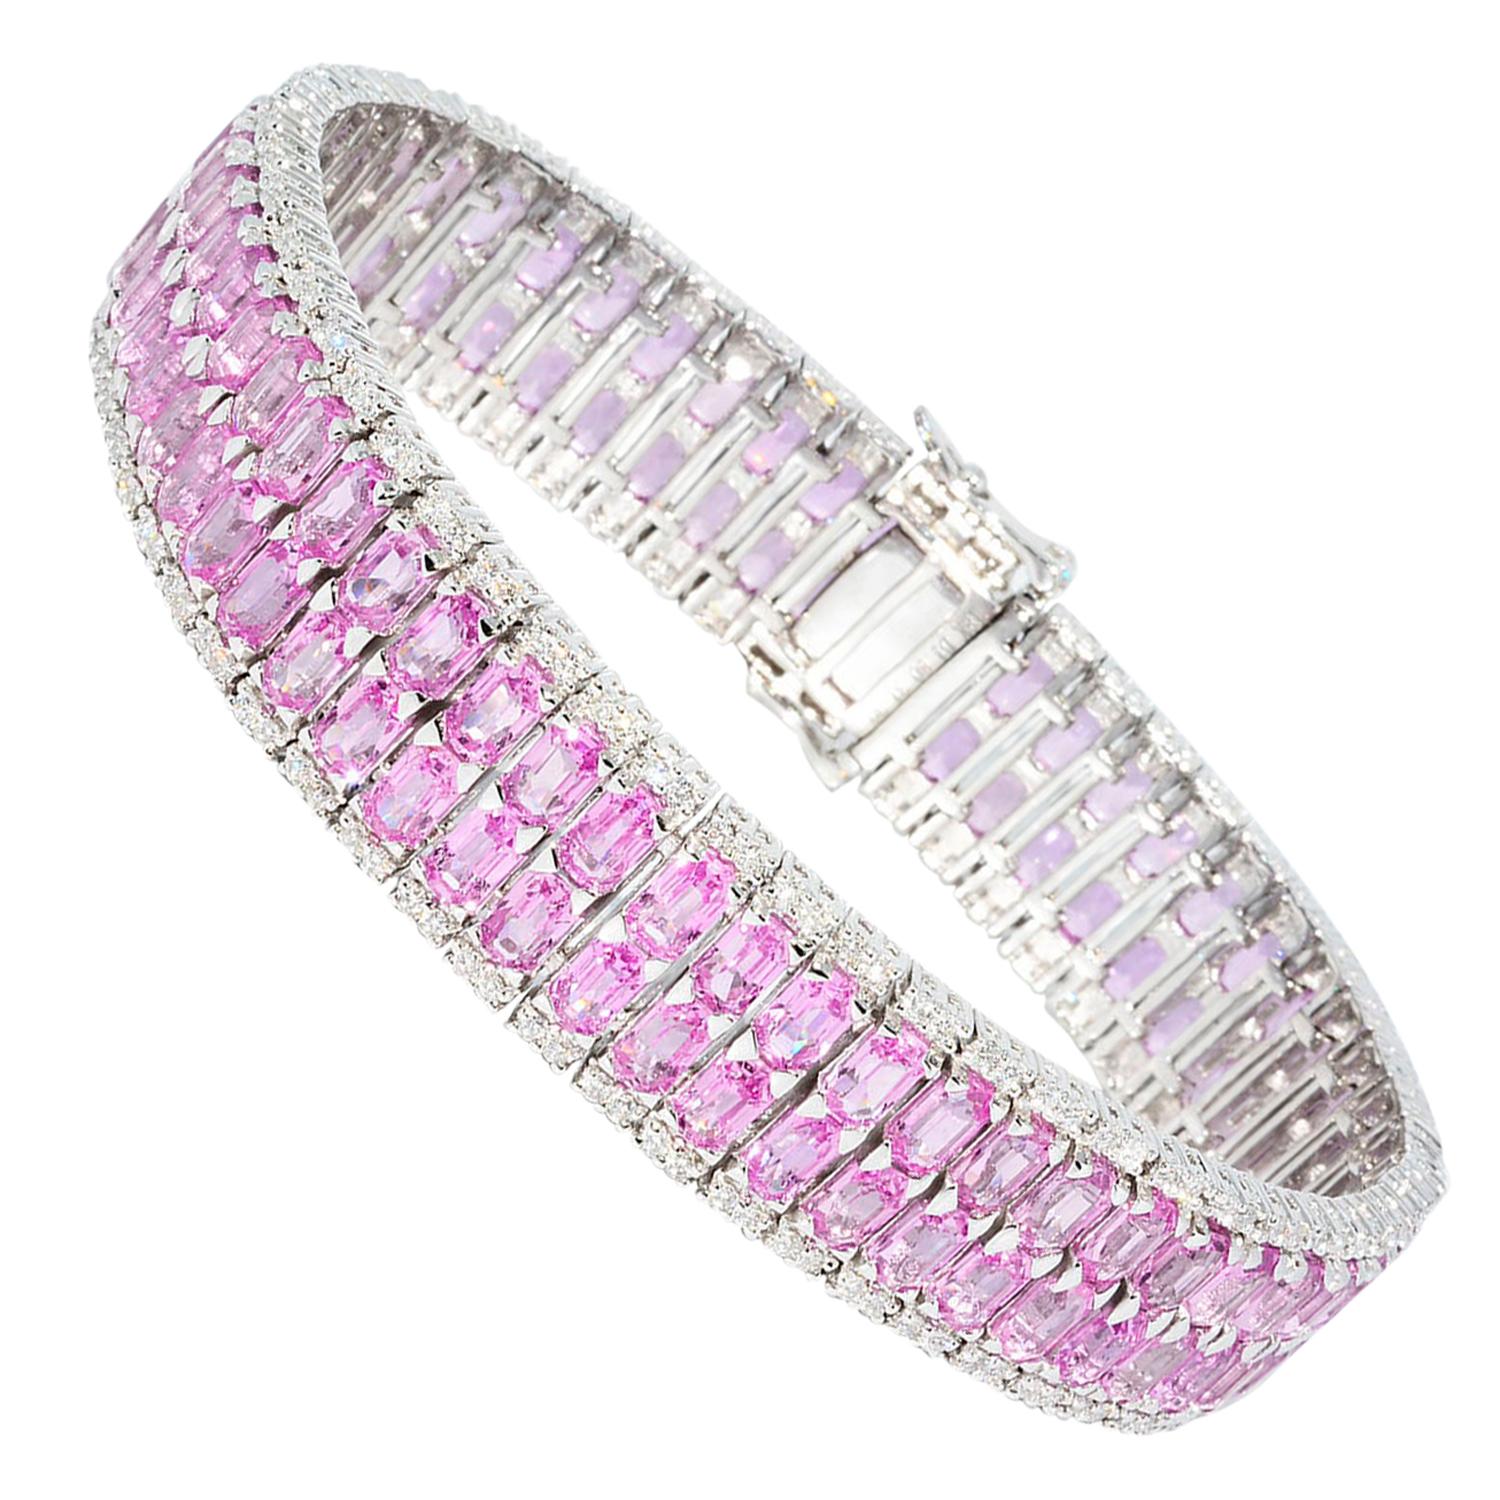 Emerald Cut Pink Sapphire and Diamond Bracelet 18 Karat White Gold